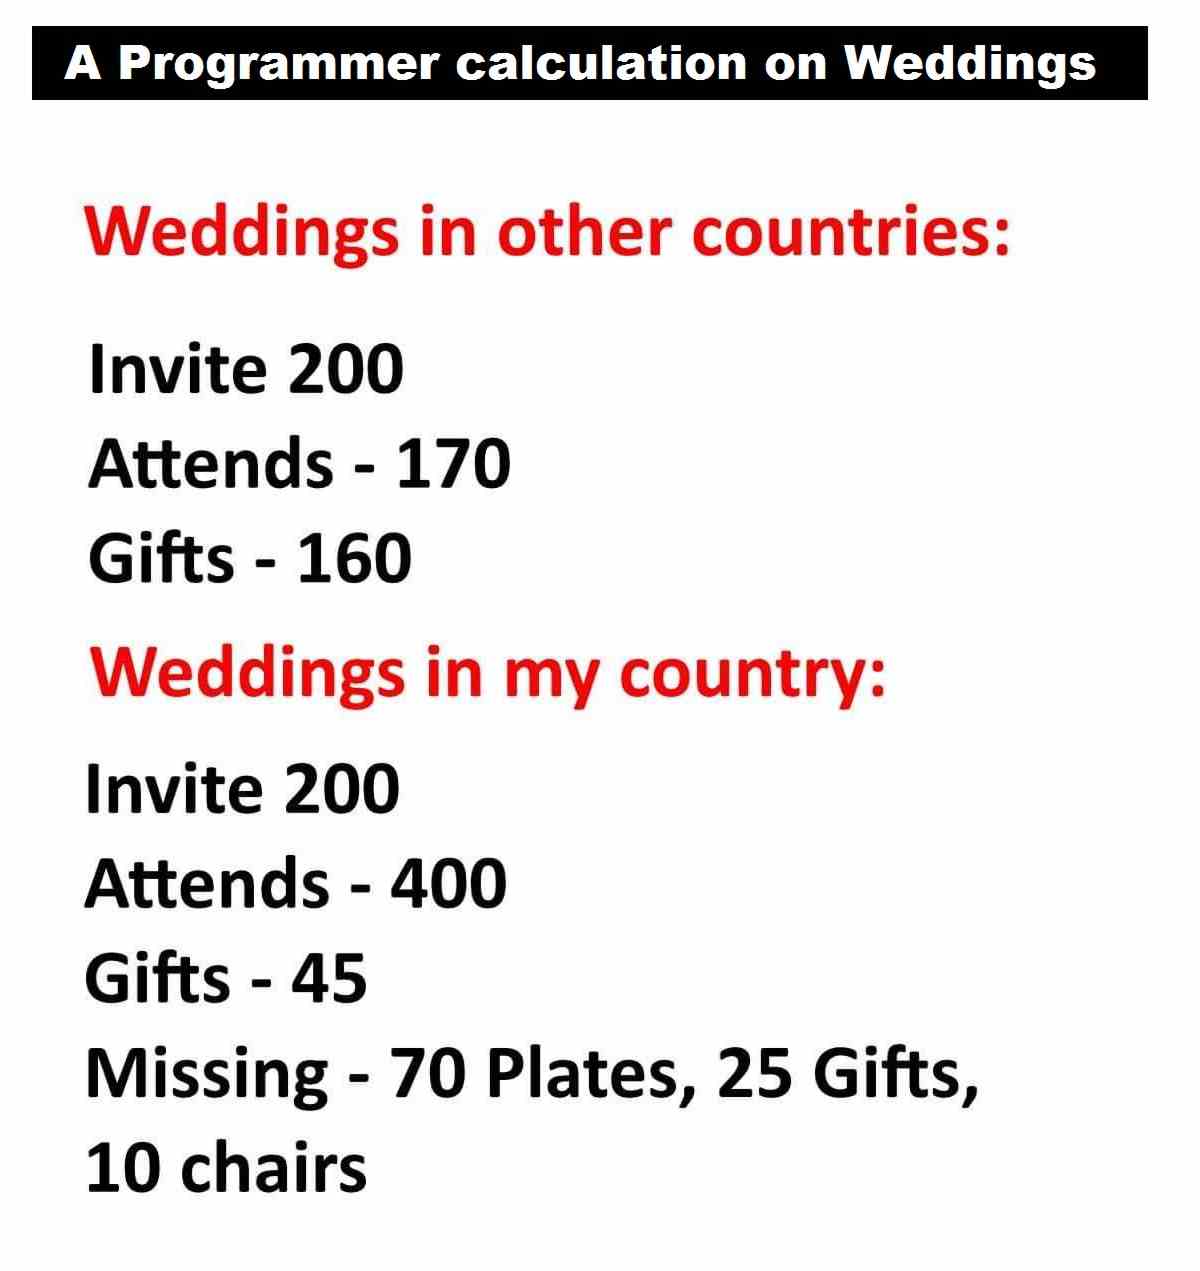 A Programmer calculation on Weddings